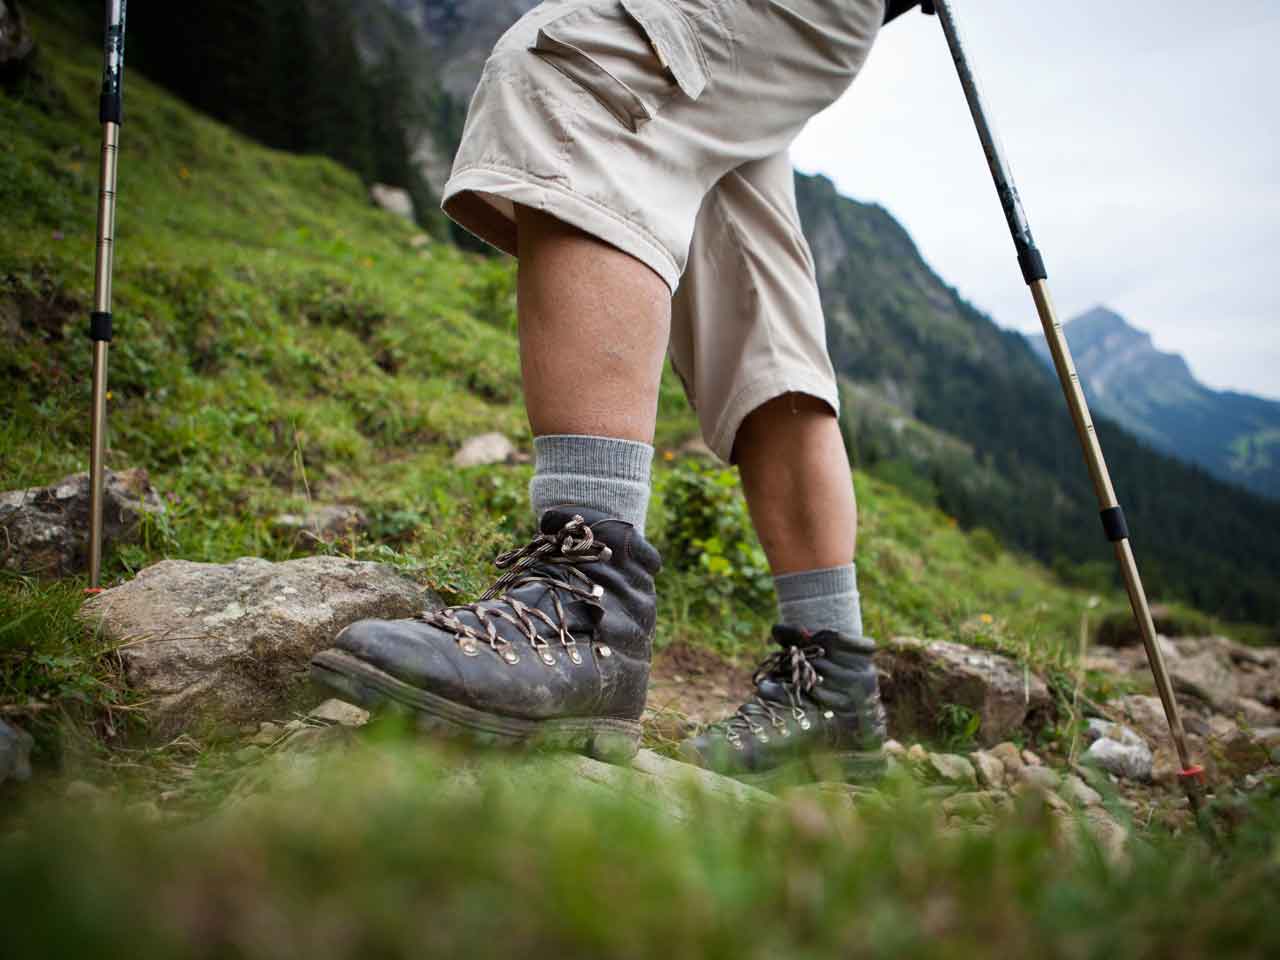 A hiker practicing Nordic walking using poles